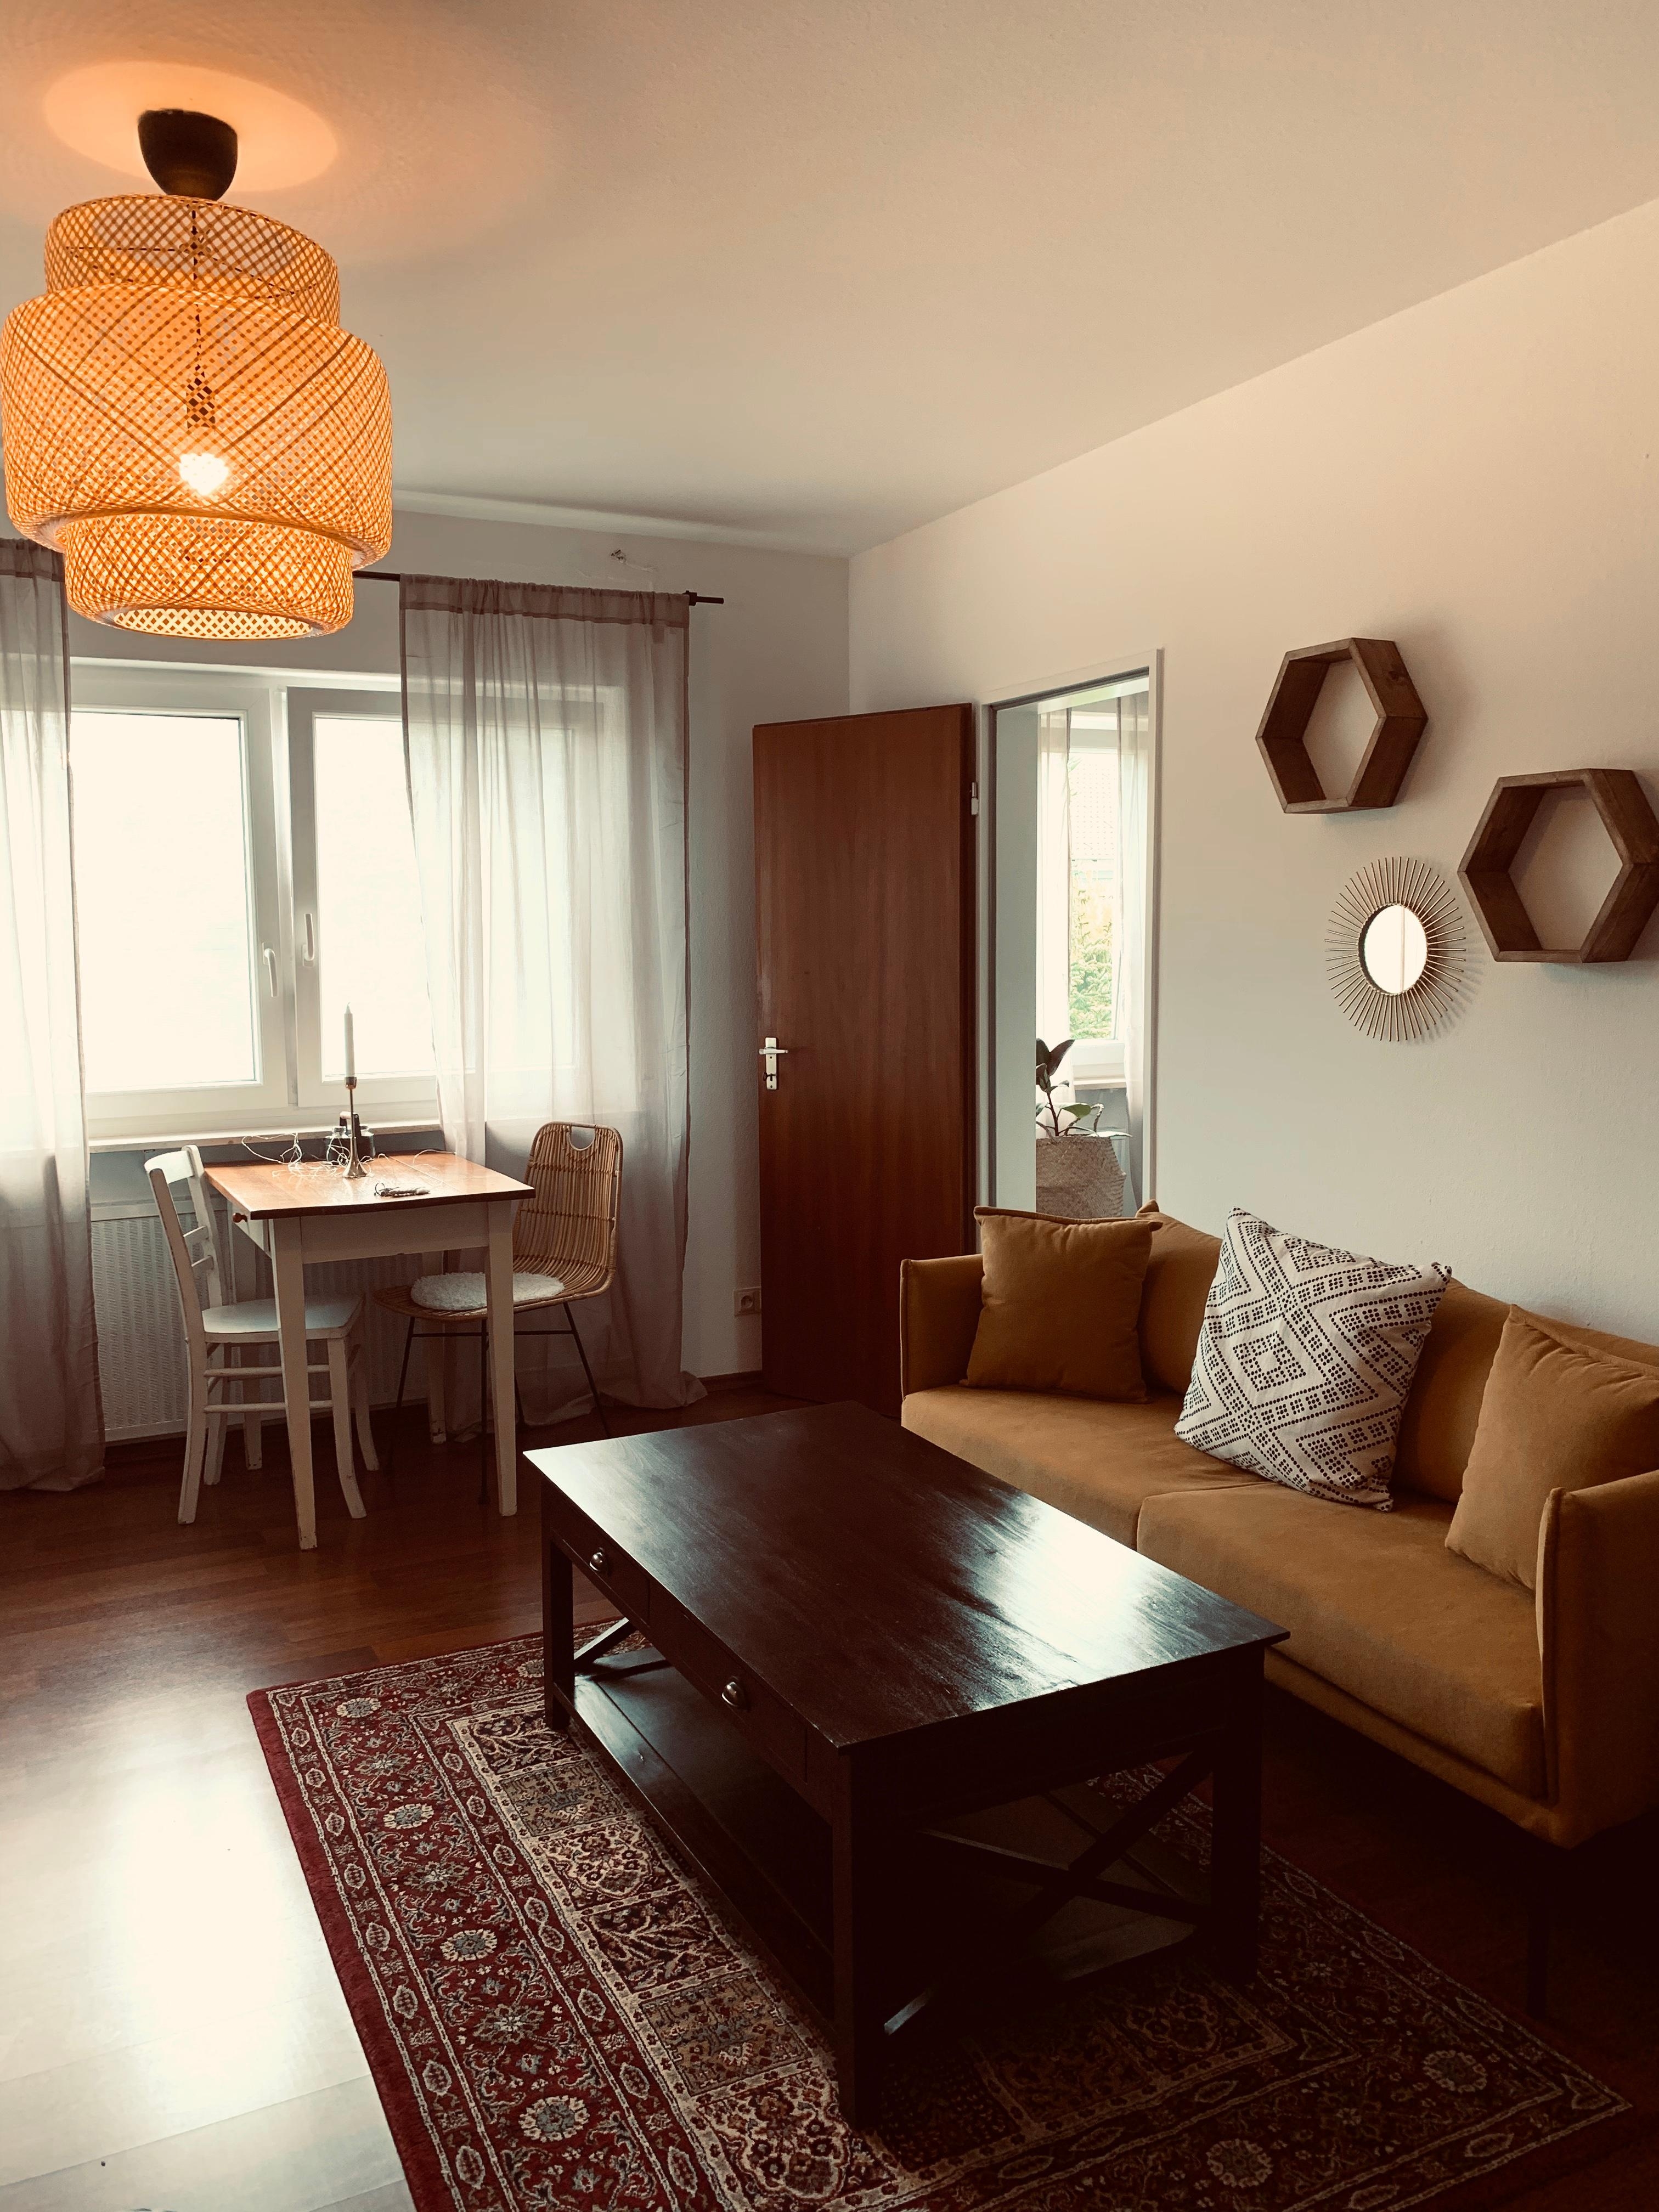 BOHO Airbnb Wohnung #boho #vintage #interiordesign #leviinterior #bohostyle 